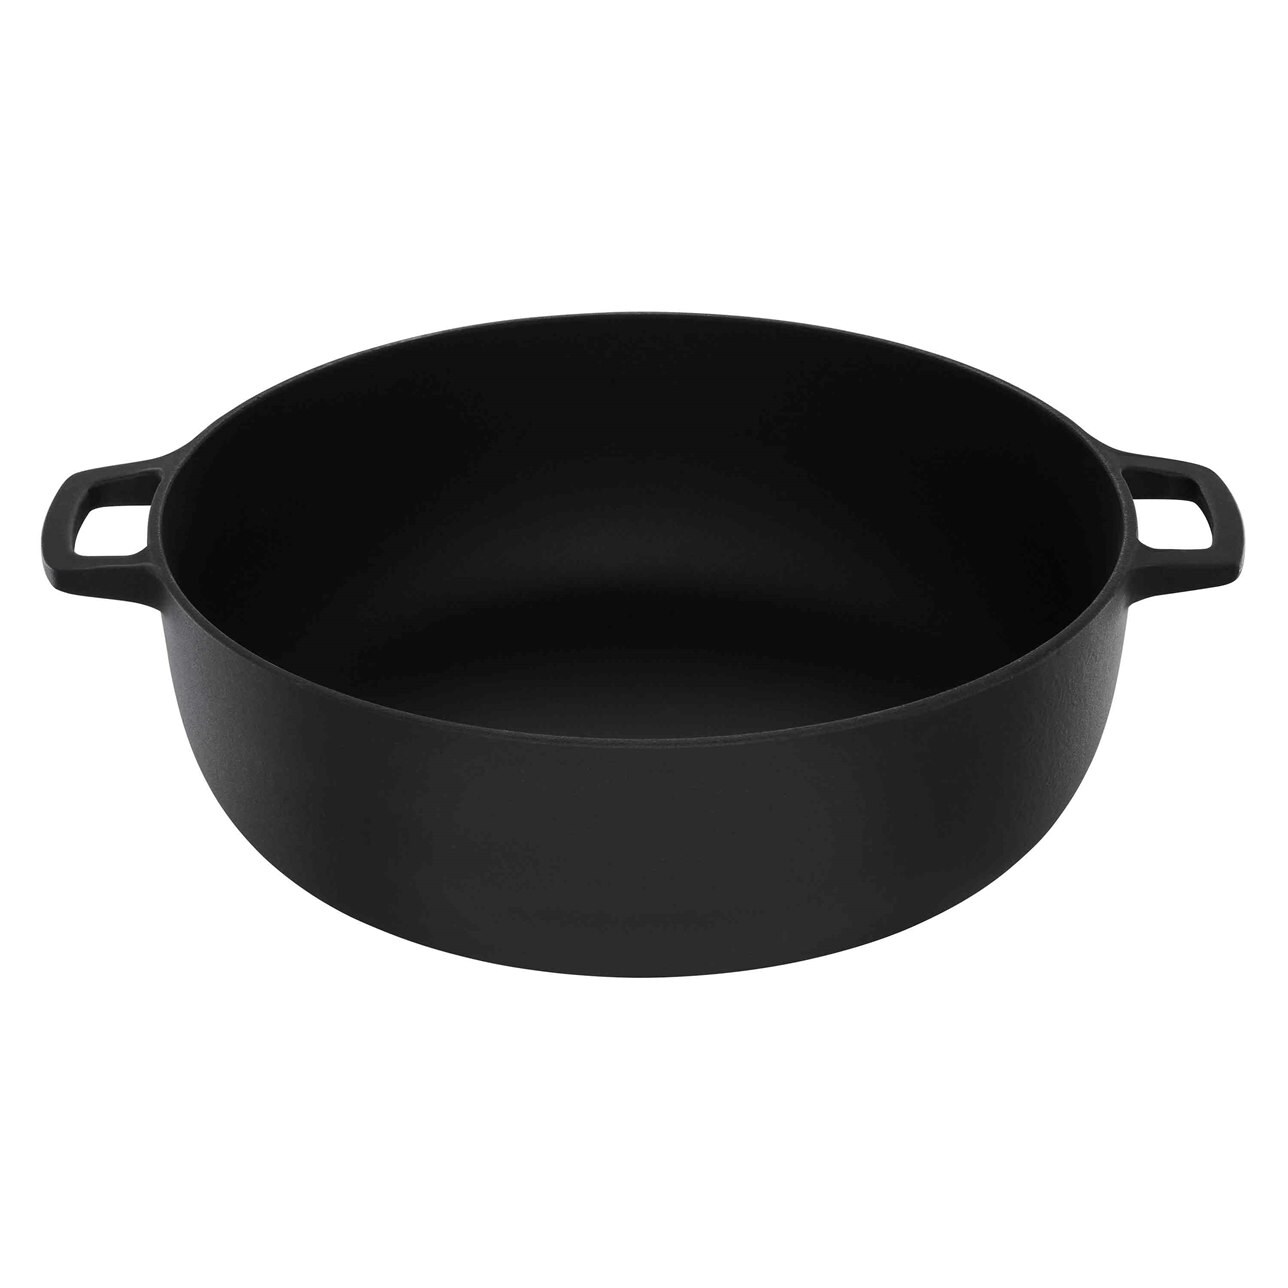 https://royaldesign.com/image/2/fiskars-norden-grill-chef-cast-iron-pot-30-cm-1